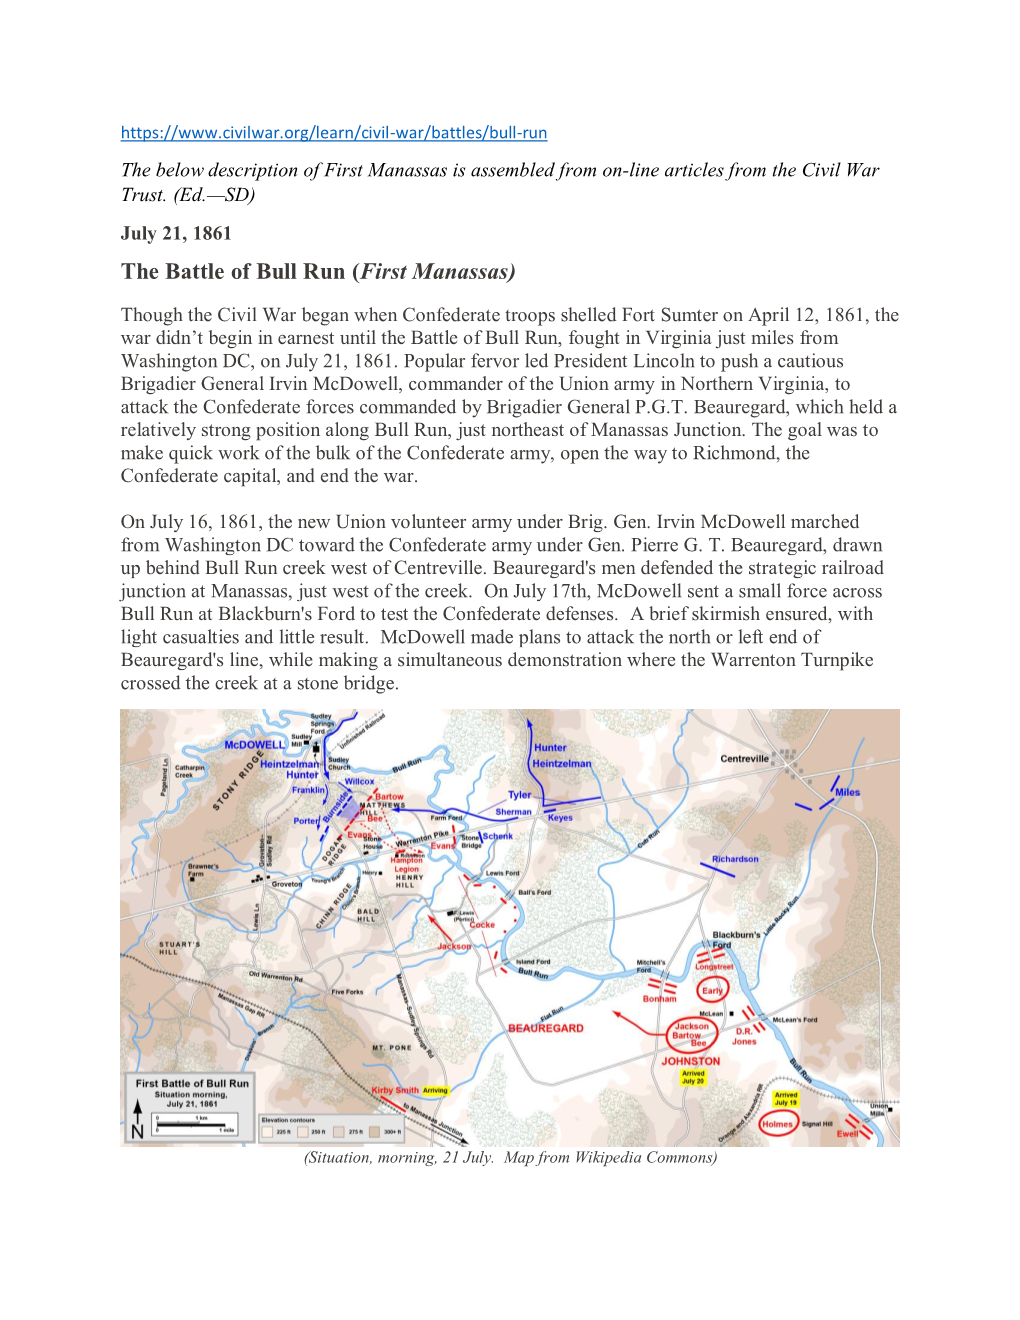 The Battle of Bull Run (First Manassas)